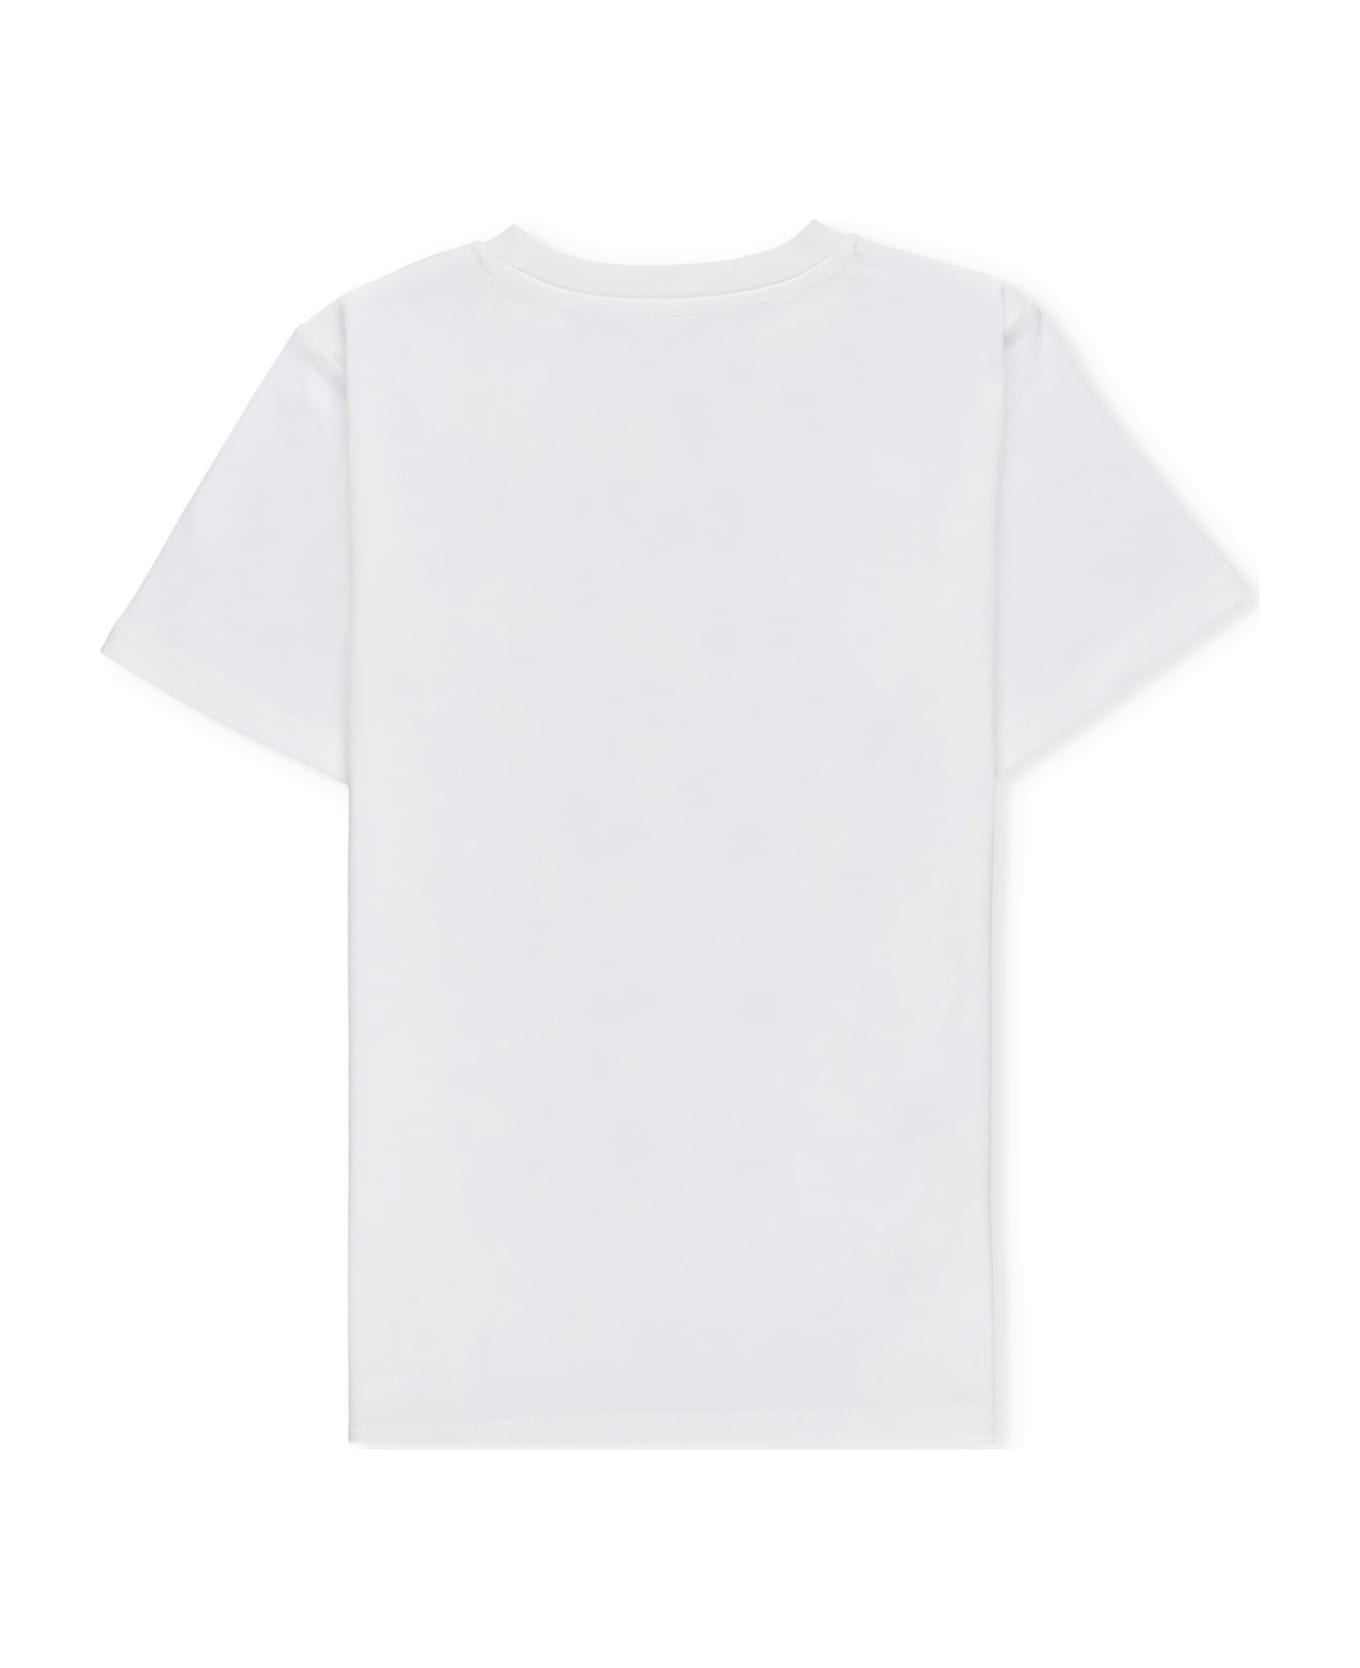 Stella McCartney T-shirt With Print - Ivory